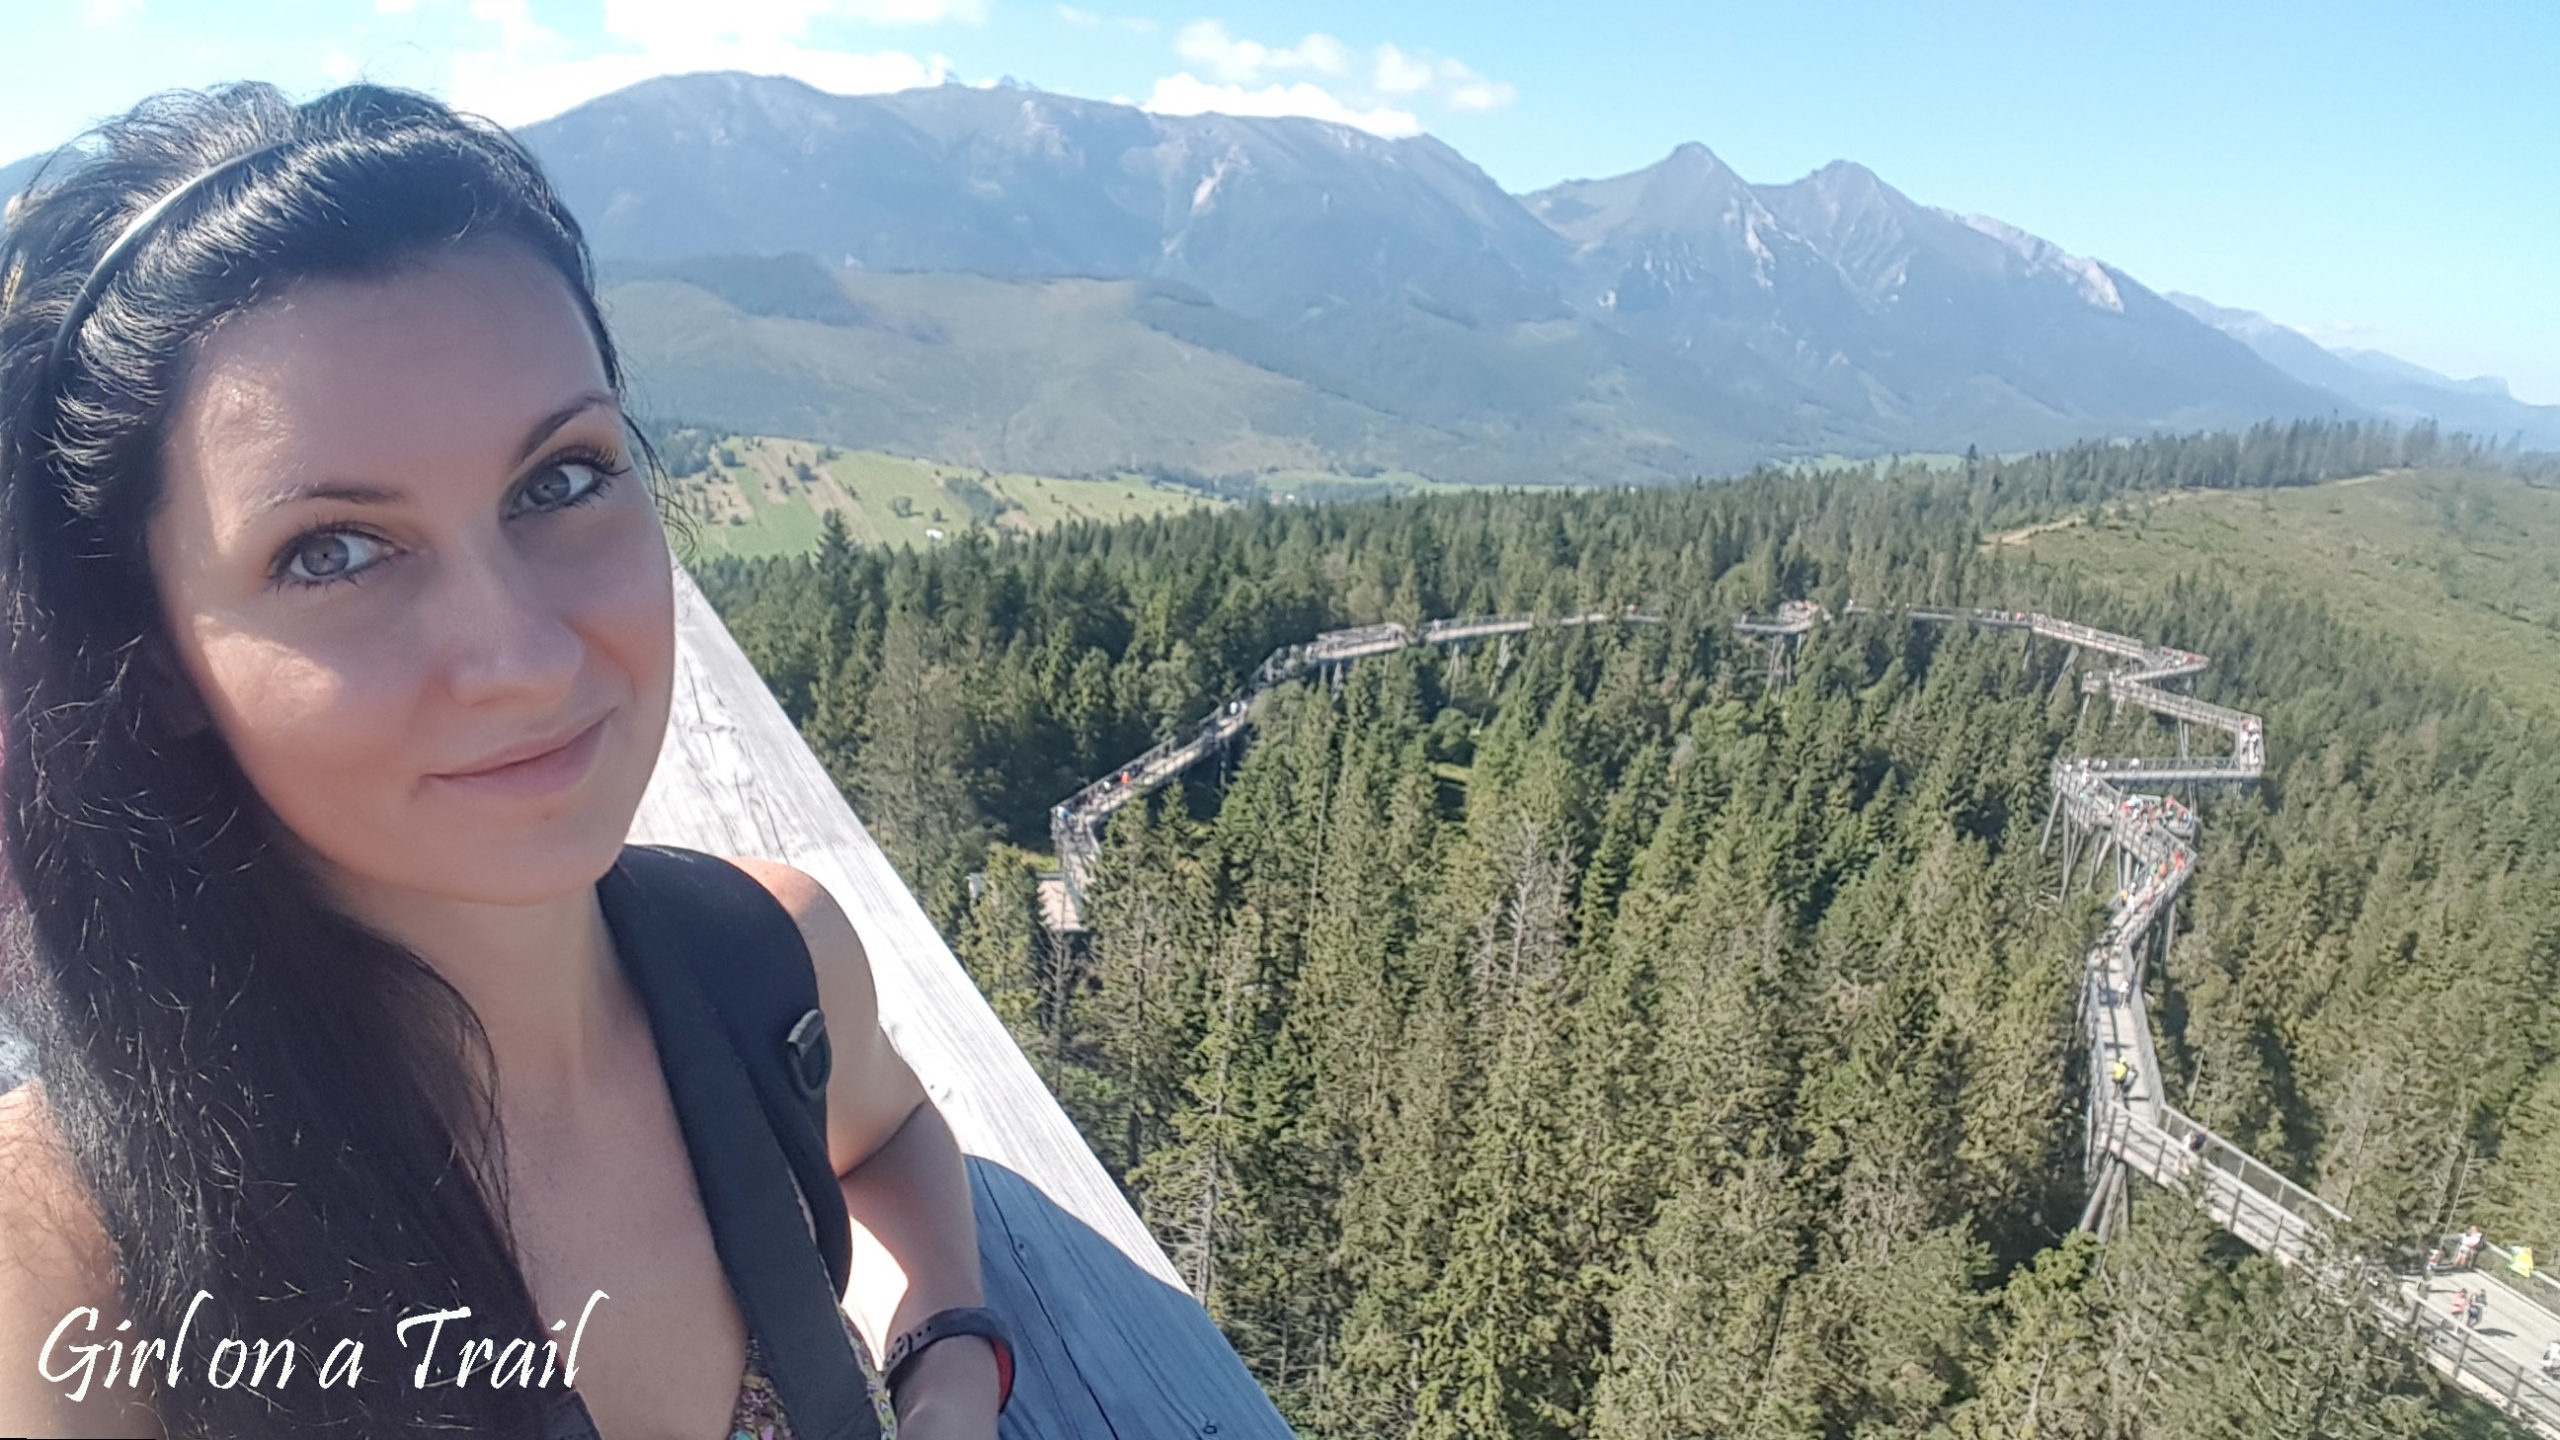 Slovakia, a spontaneous trip – Girl on an unexpected trail!